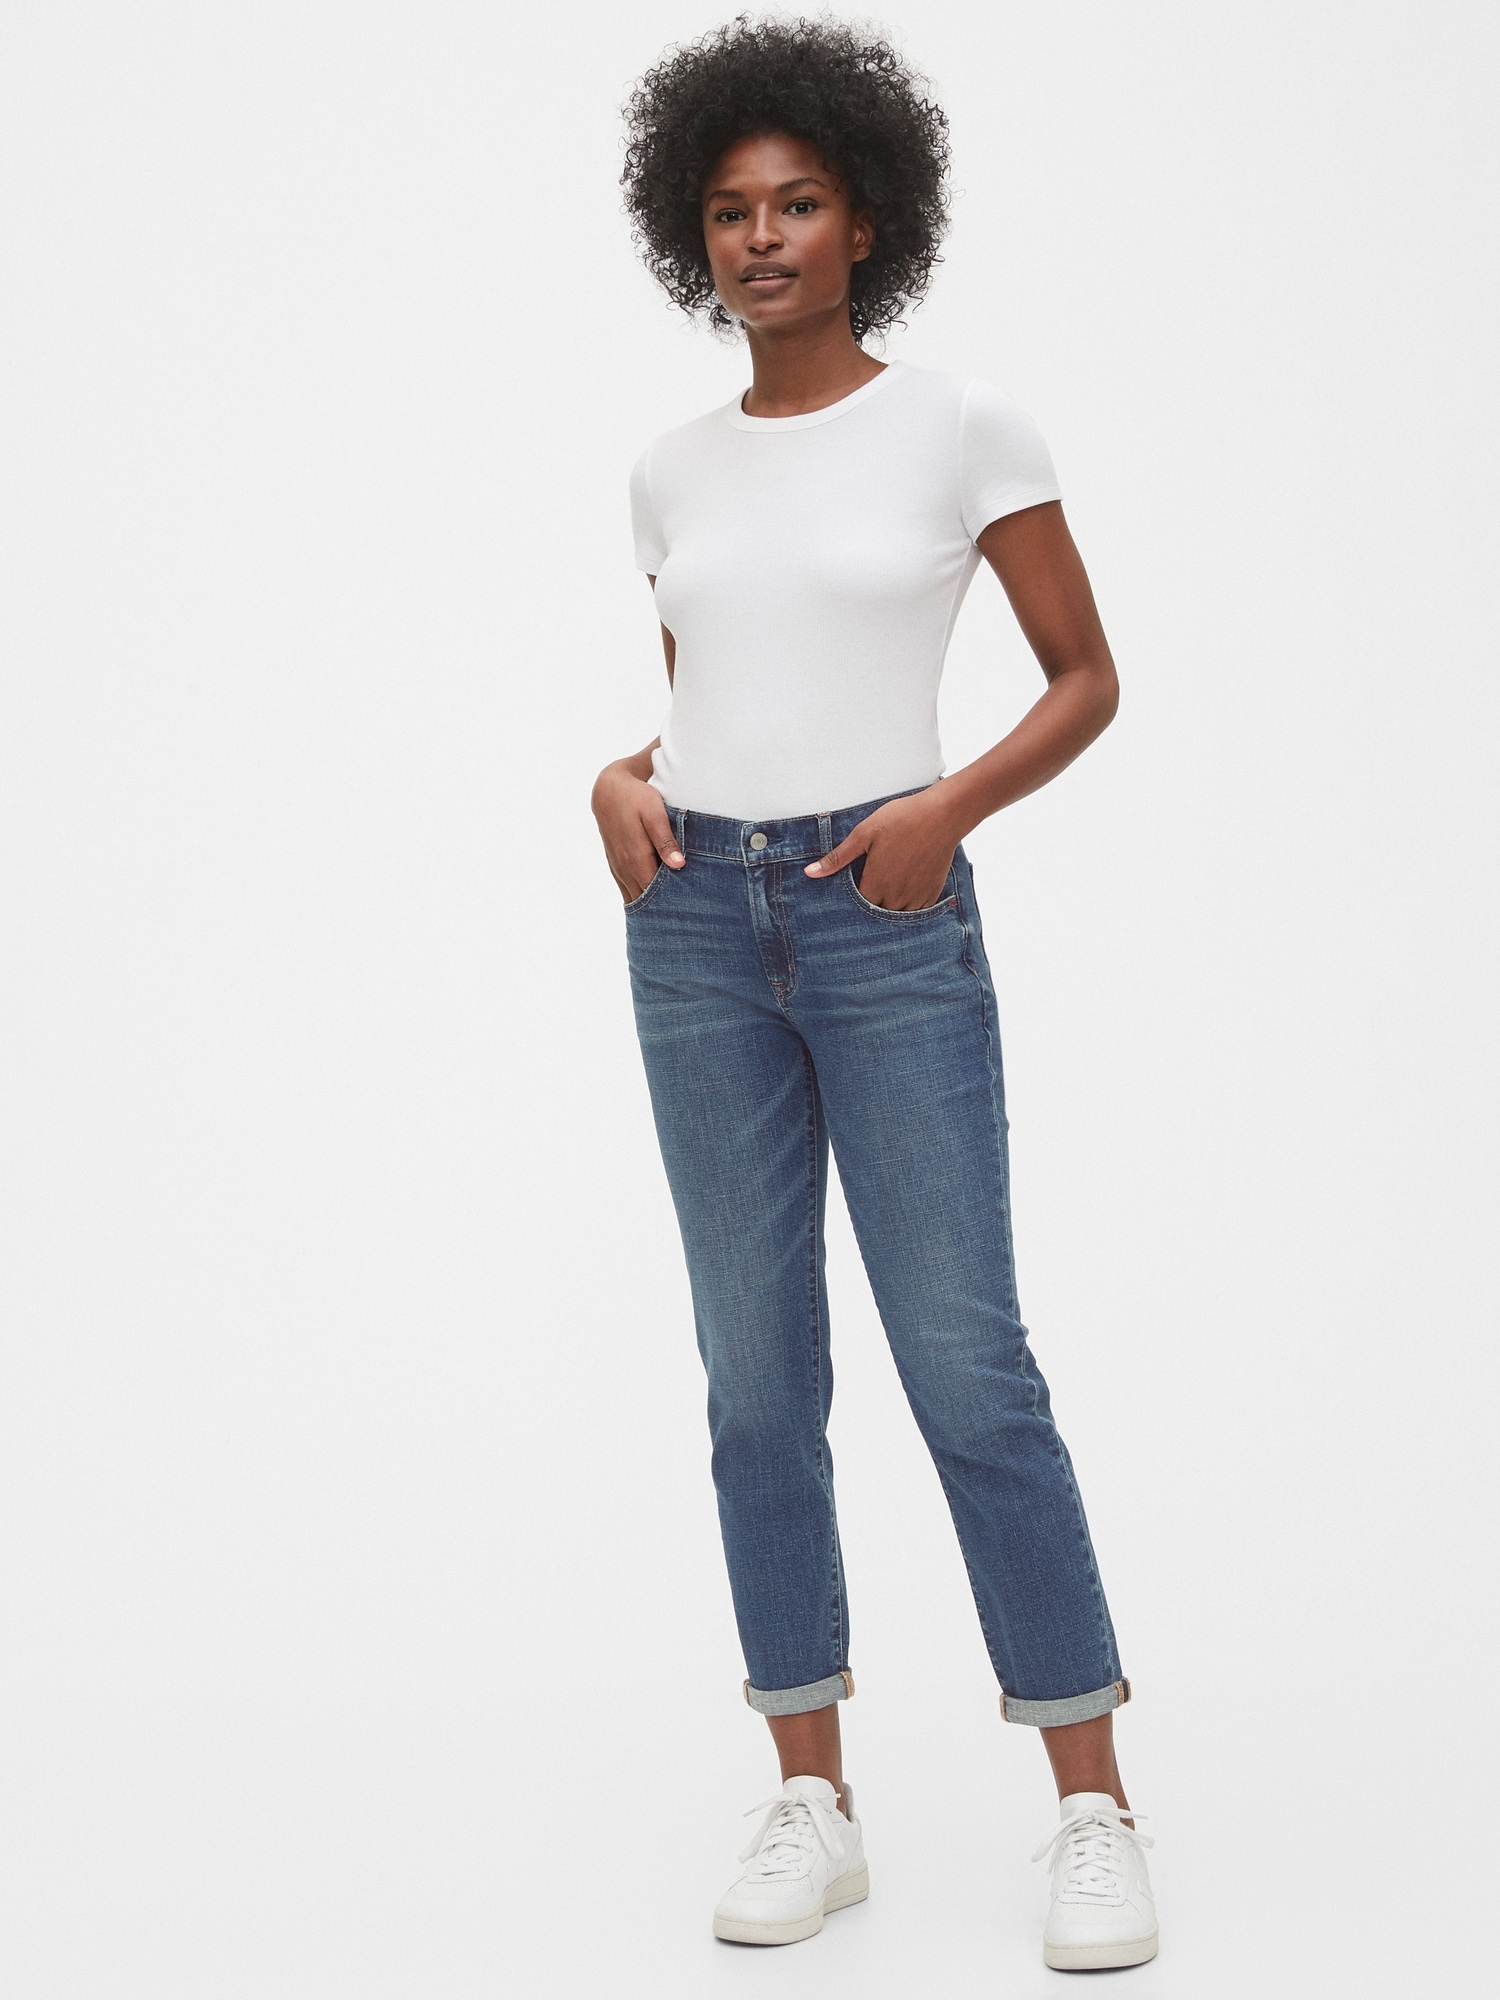 gap black girlfriend jeans